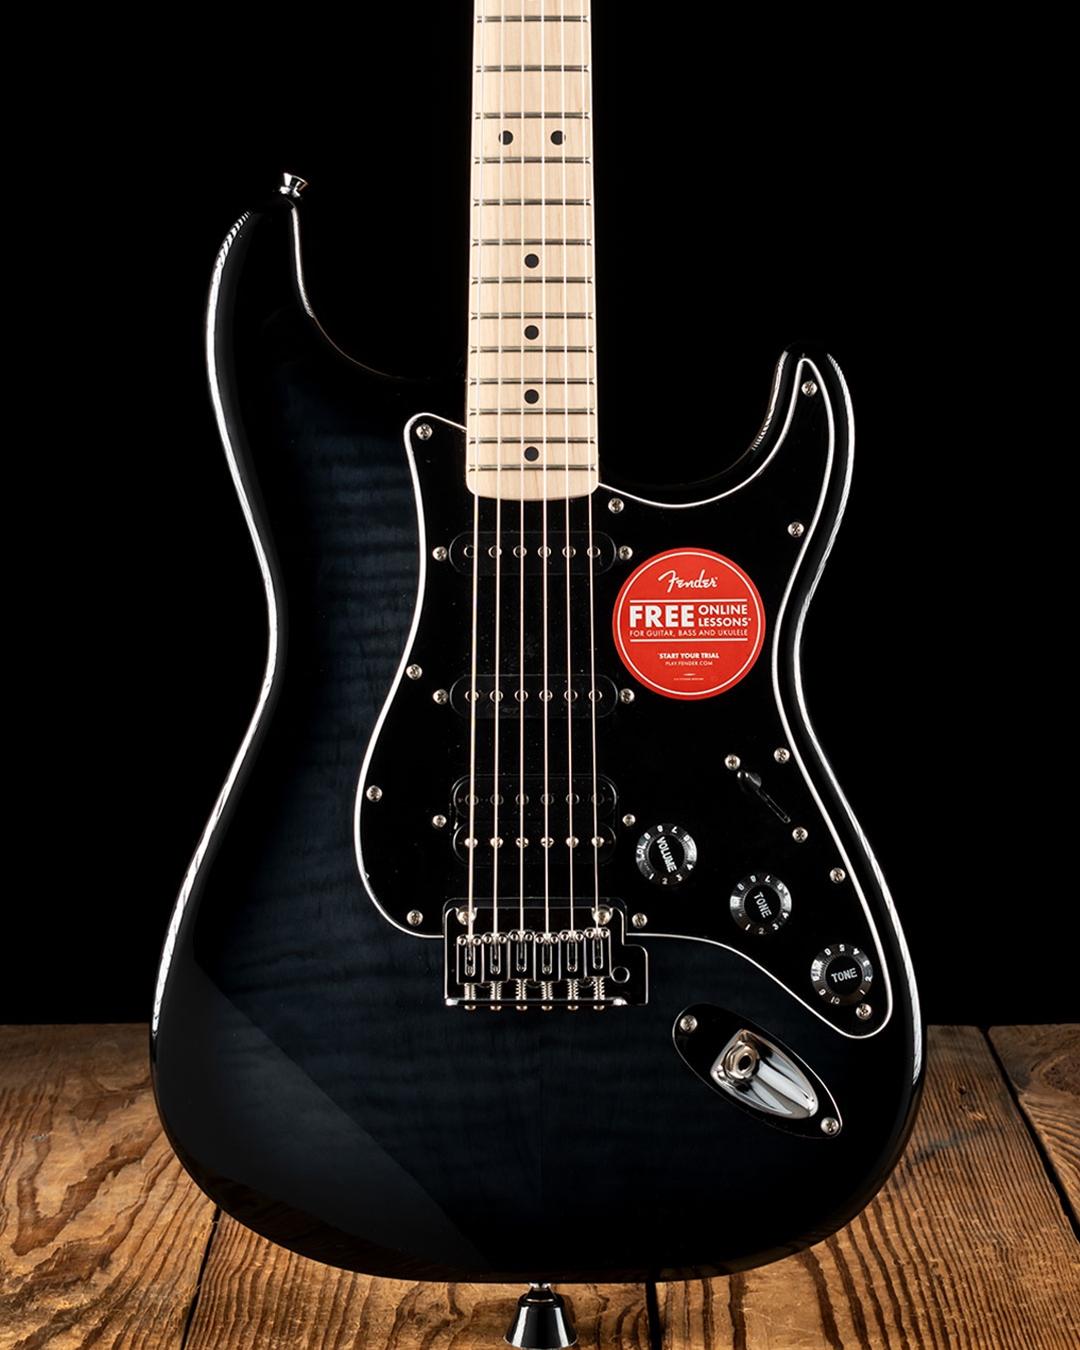 Squier Affinity Series Stratocaster FMT HSS - Black Burst